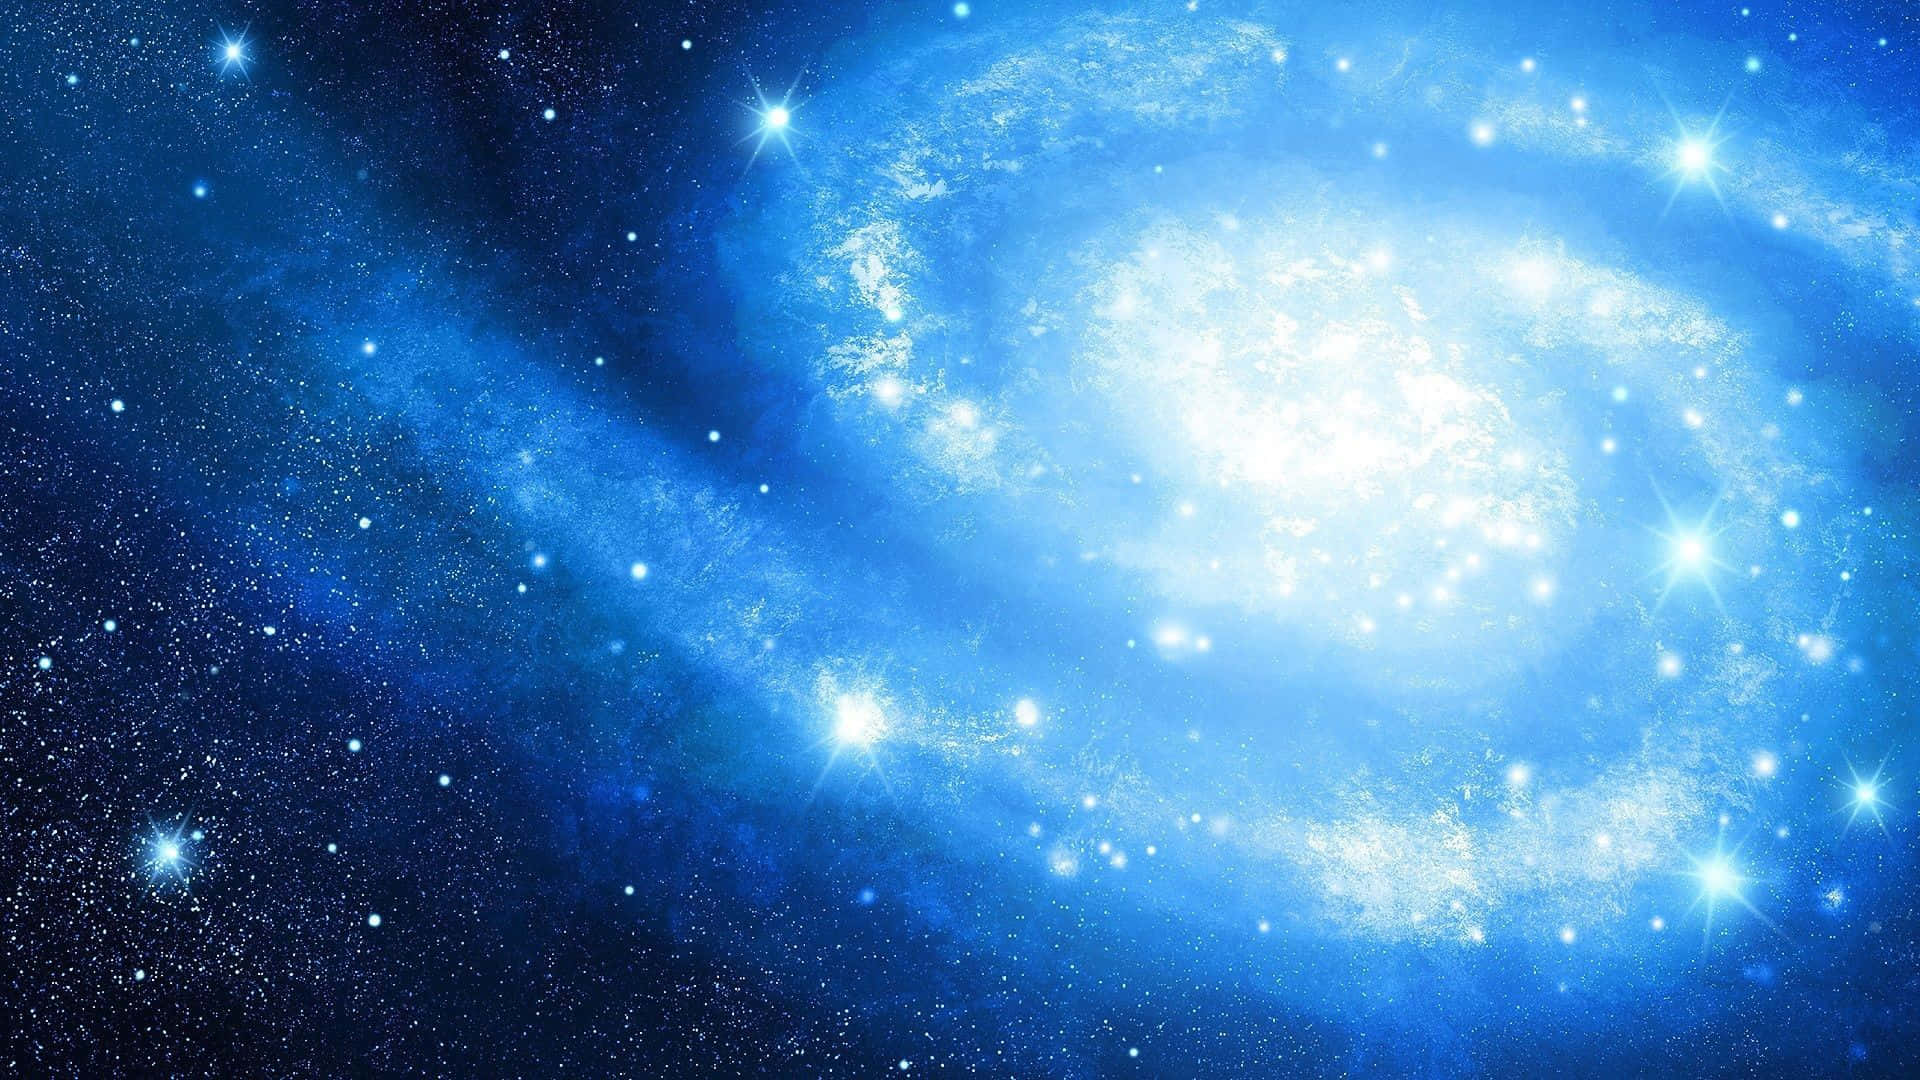 "the Splendor Of The Cool Blue Galaxy" Wallpaper